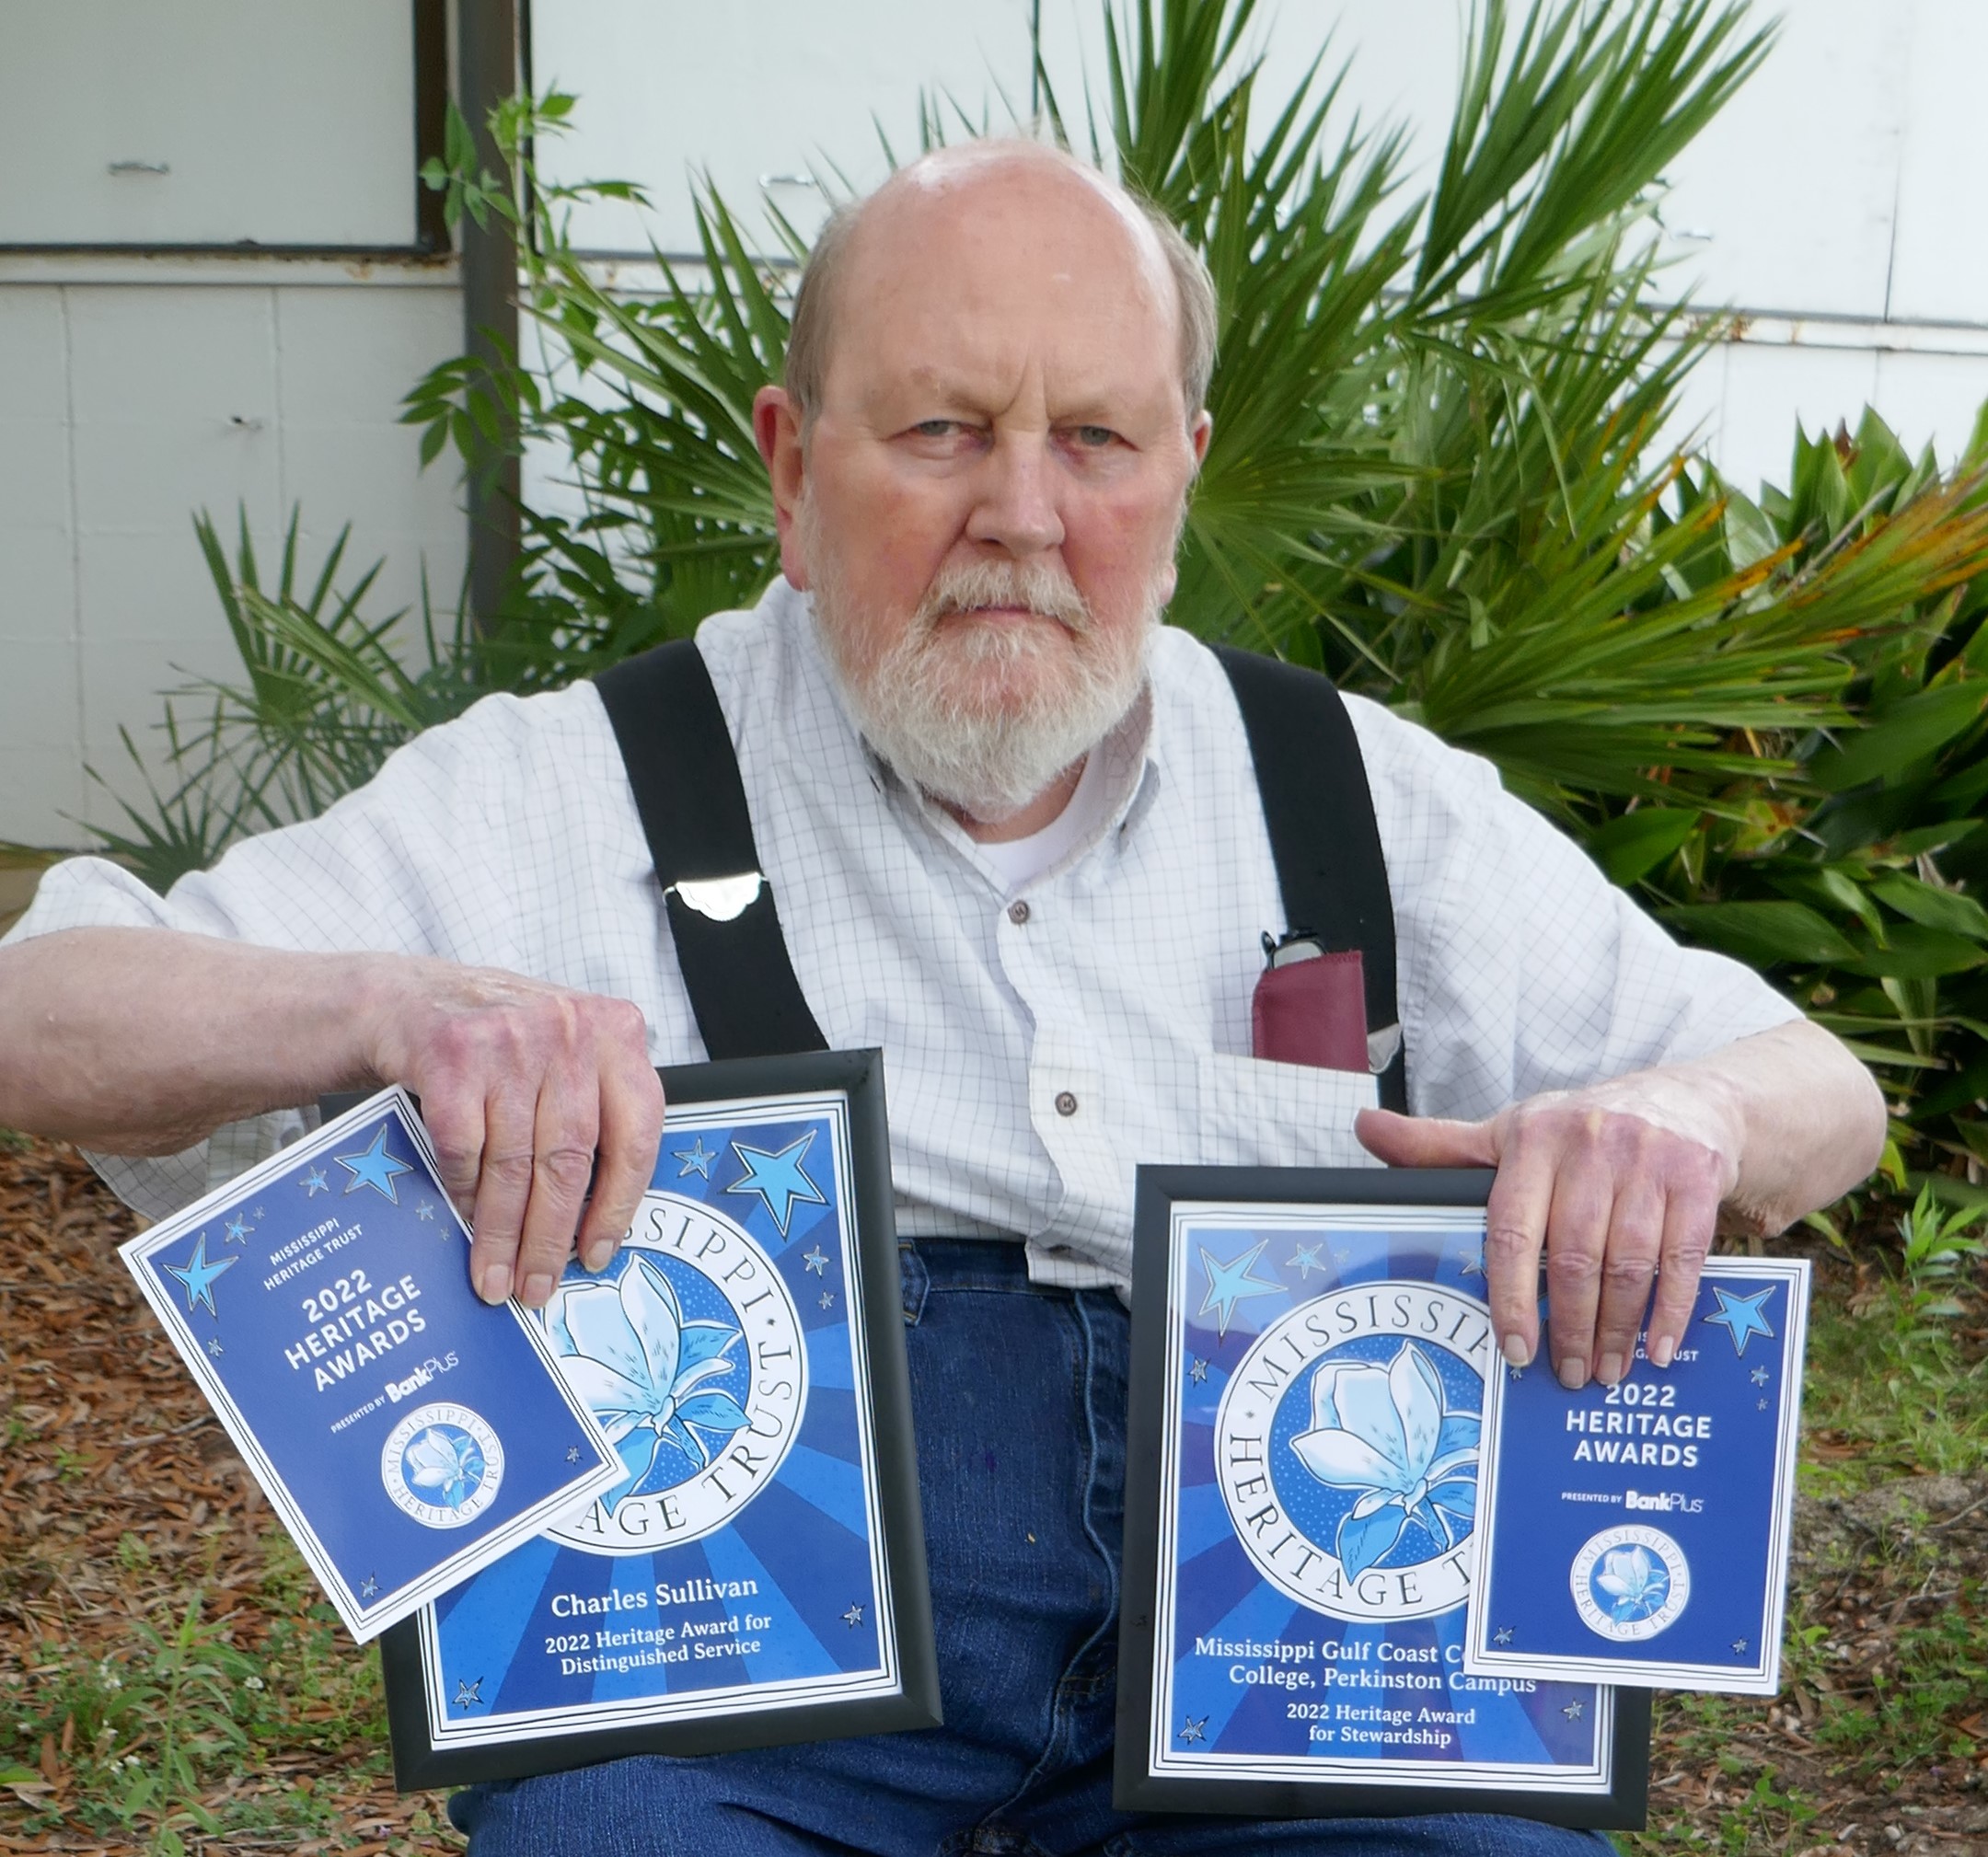 Charles Sullivan with awards